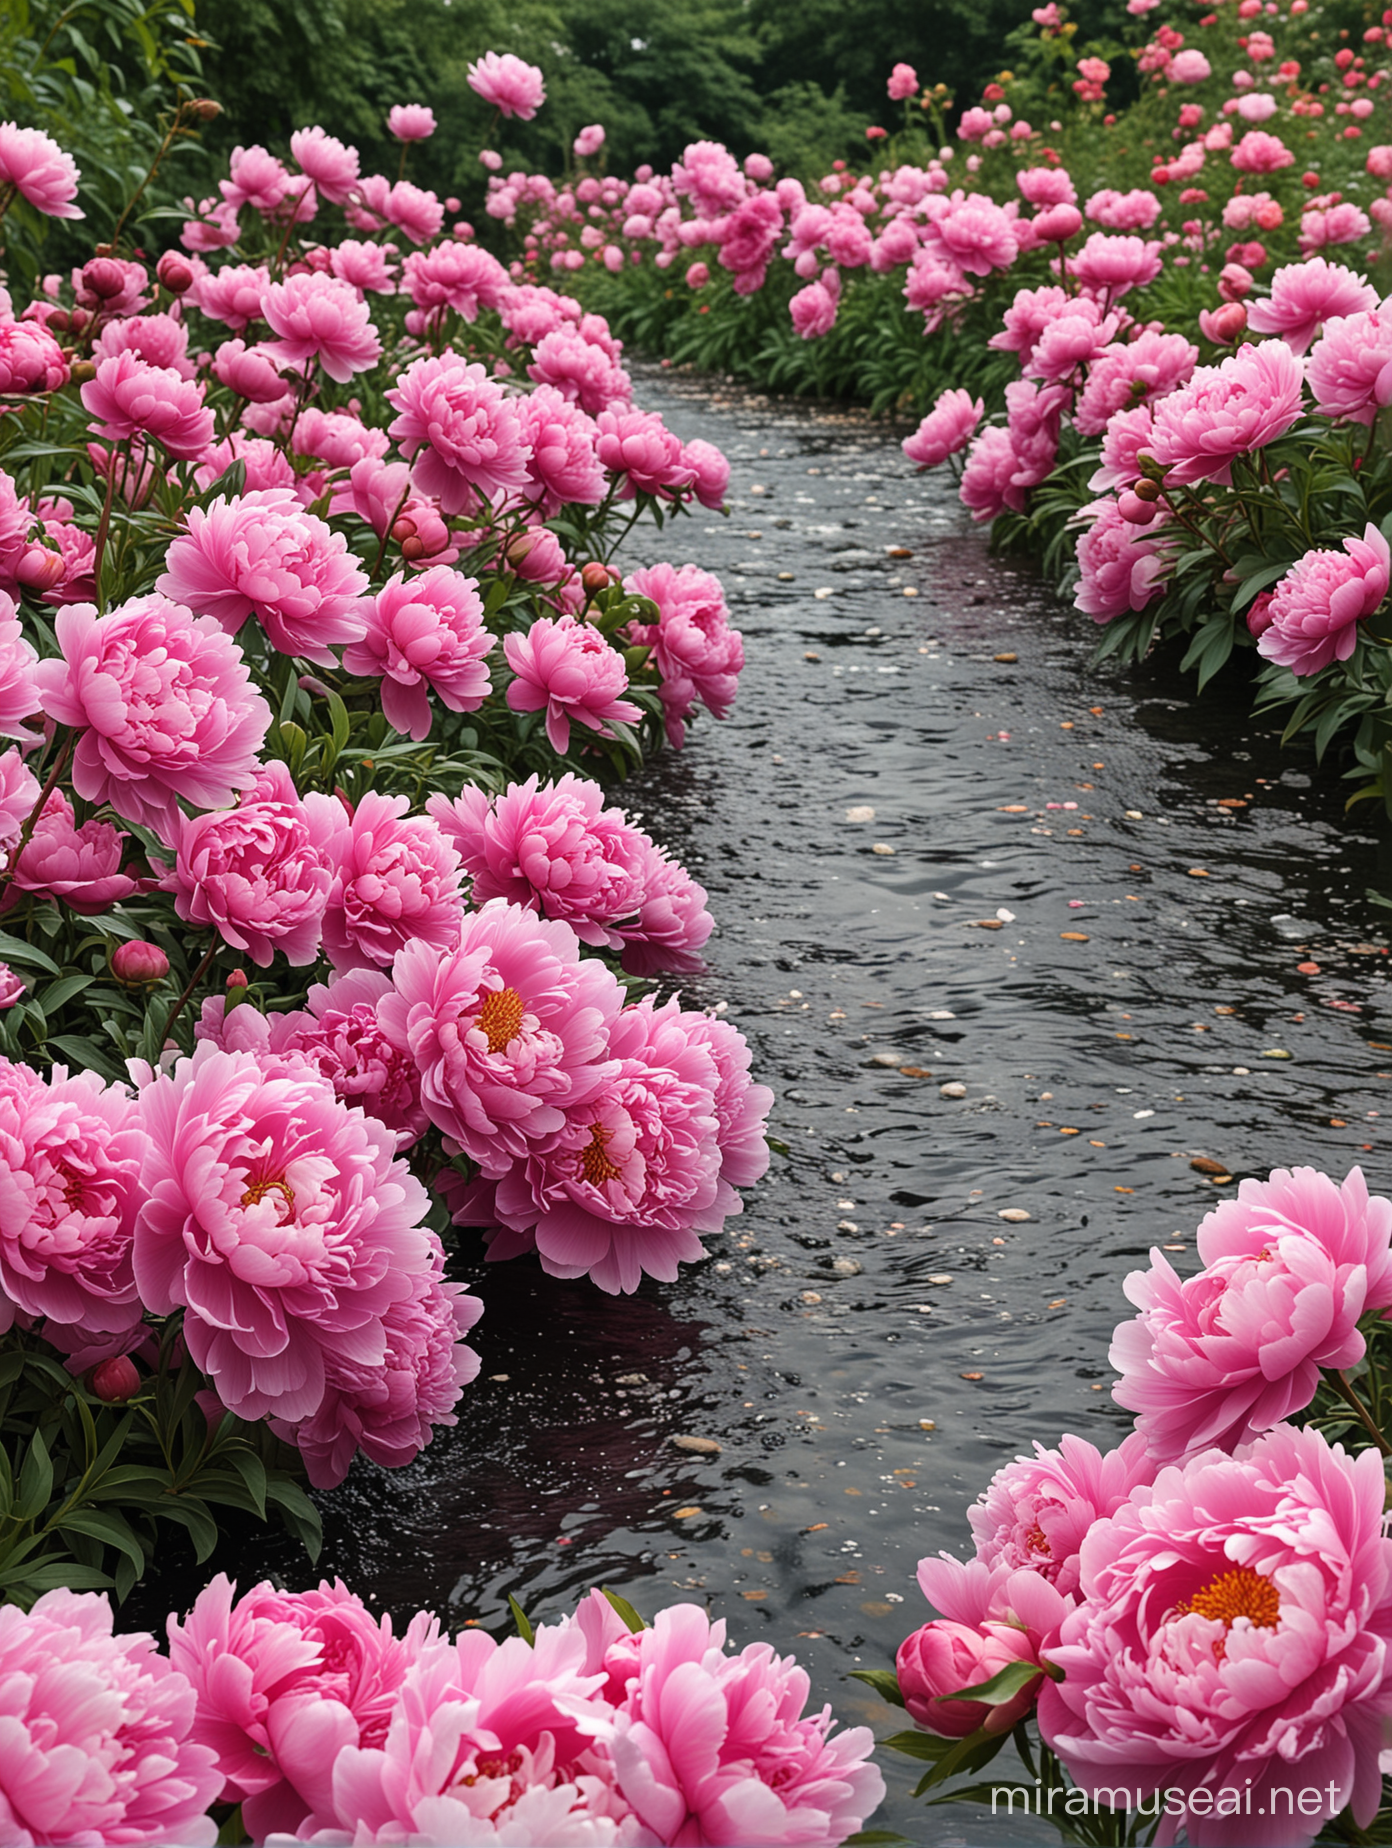 Romantic Pink Peony Garden in Stunning HD 4K Resolution